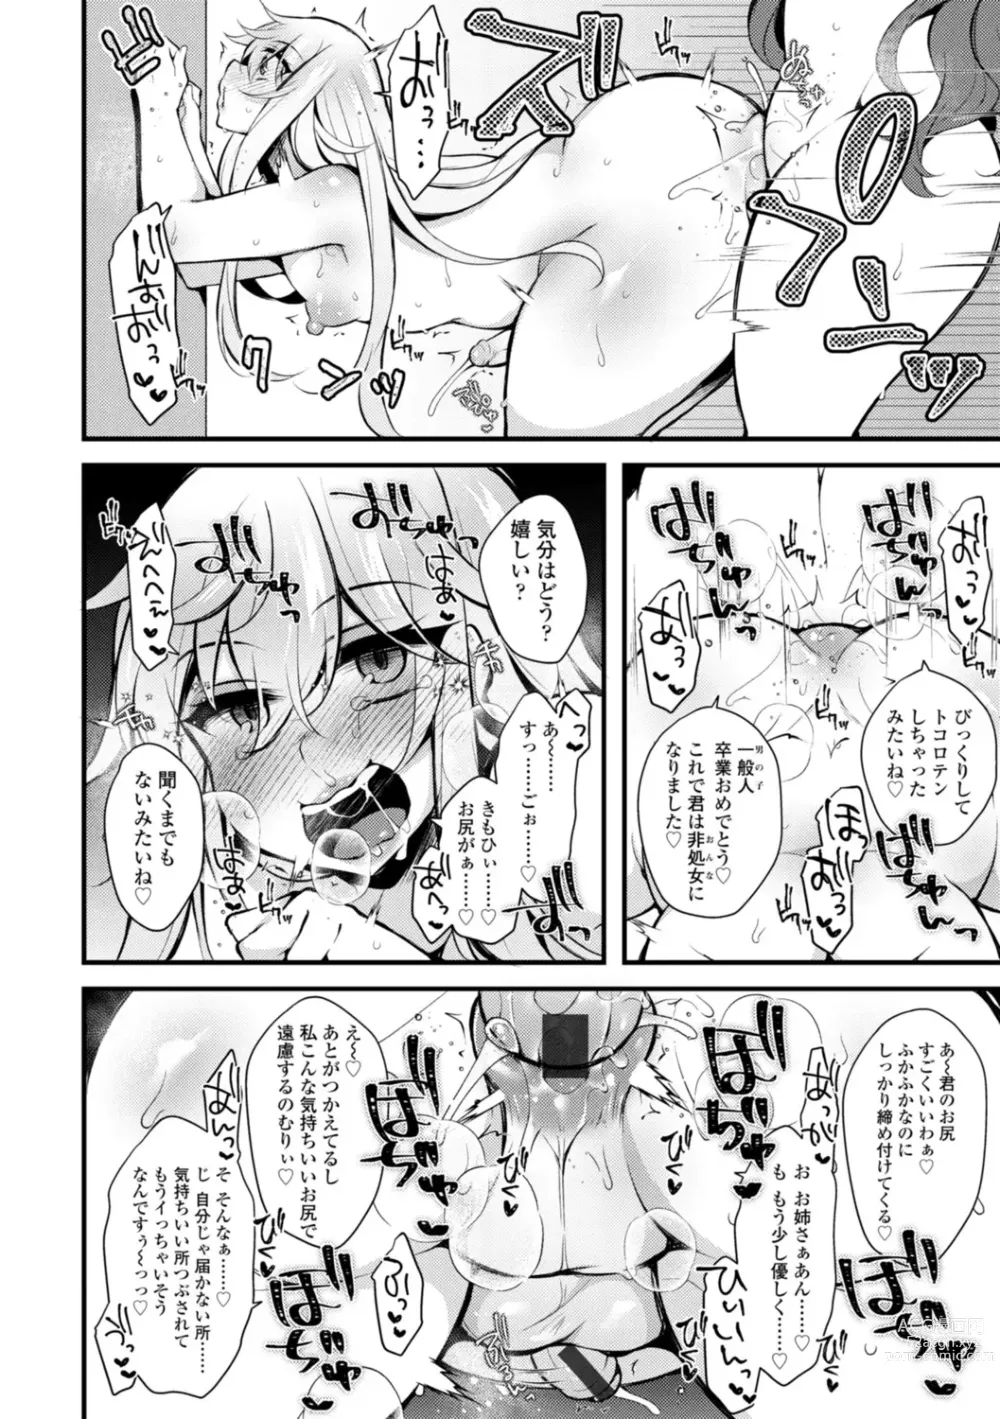 Page 182 of manga Onnanoko-sama no Iu Toori